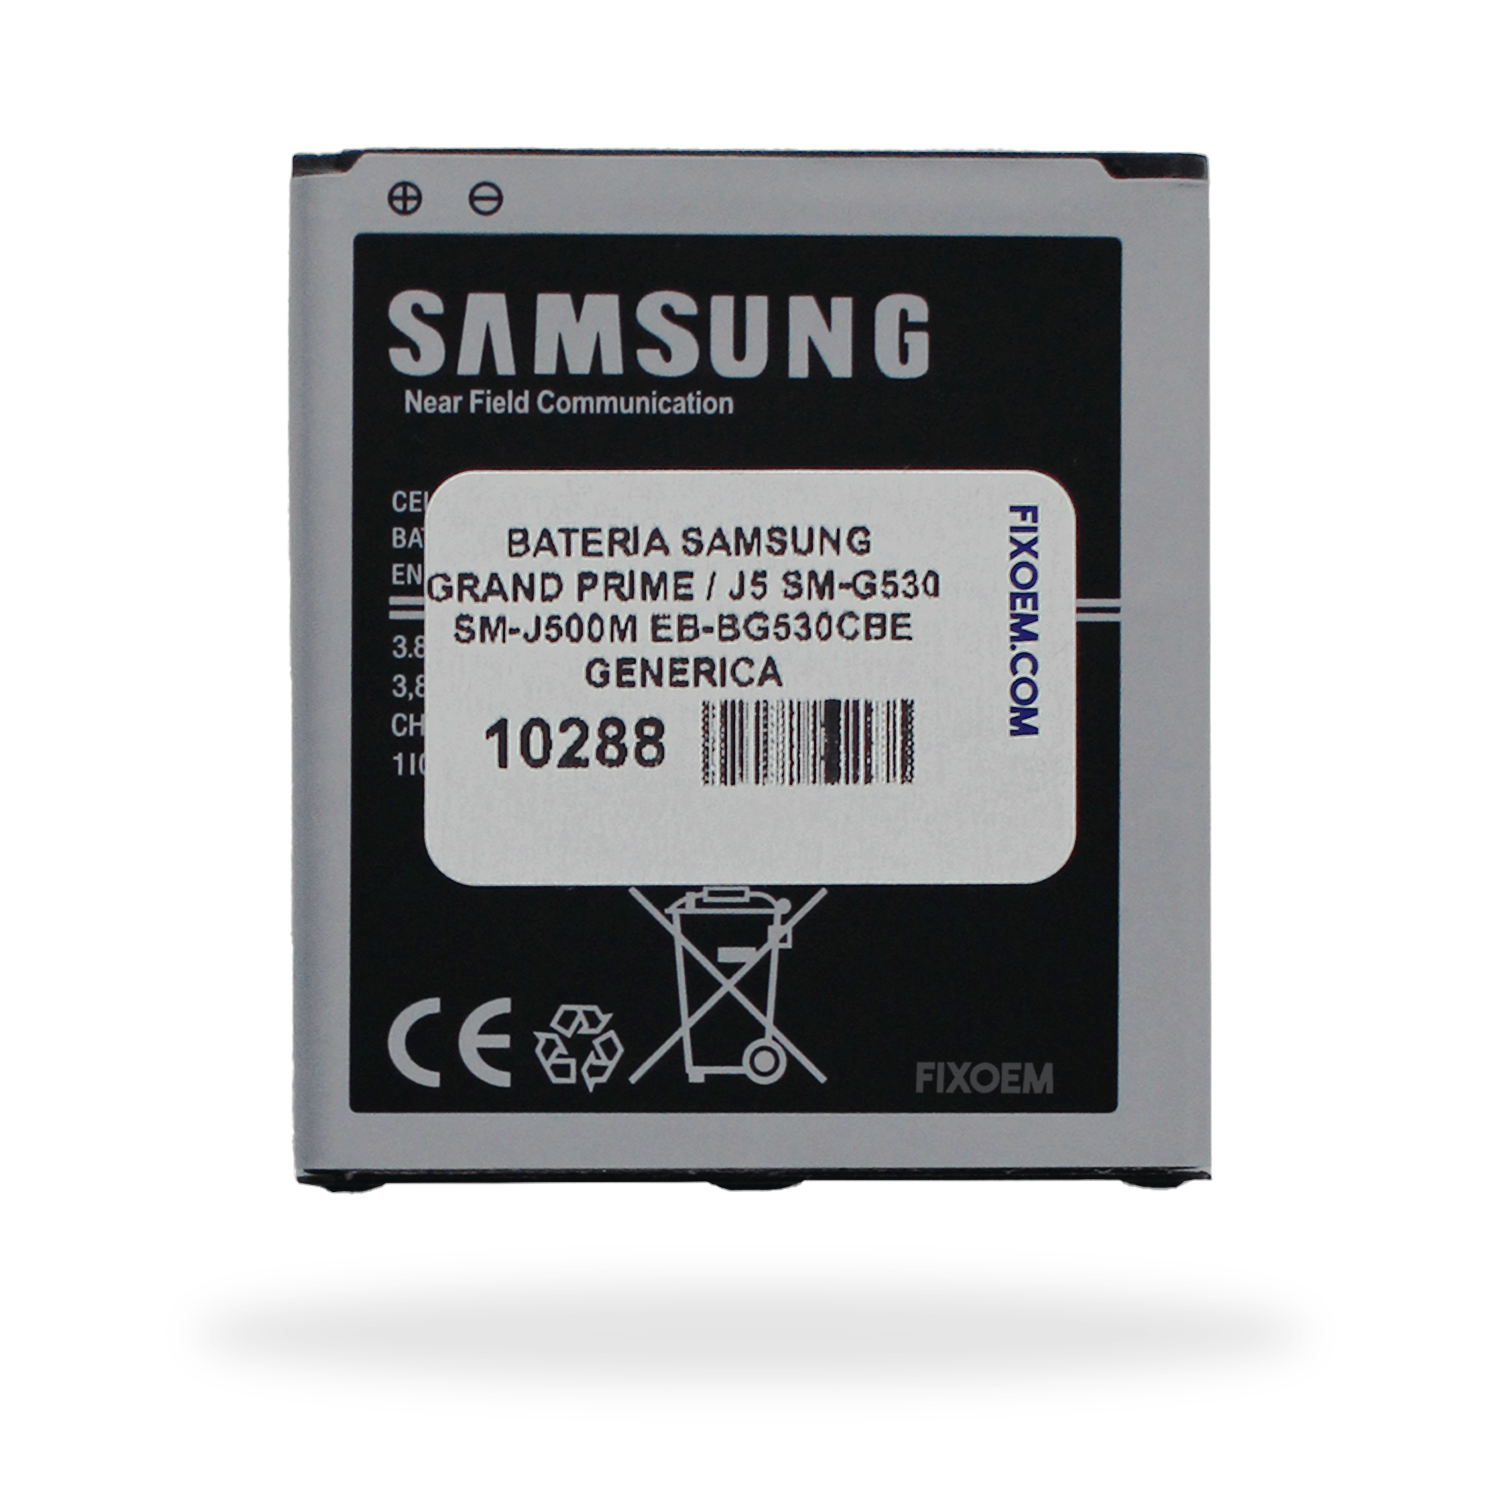 Bateria Samsung Grand Prime /J5 /S4 Sm-G530 Sm-J500M Eb-Bg530Cbe a solo $ 70.00 Refaccion y puestos celulares, refurbish y microelectronica.- FixOEM